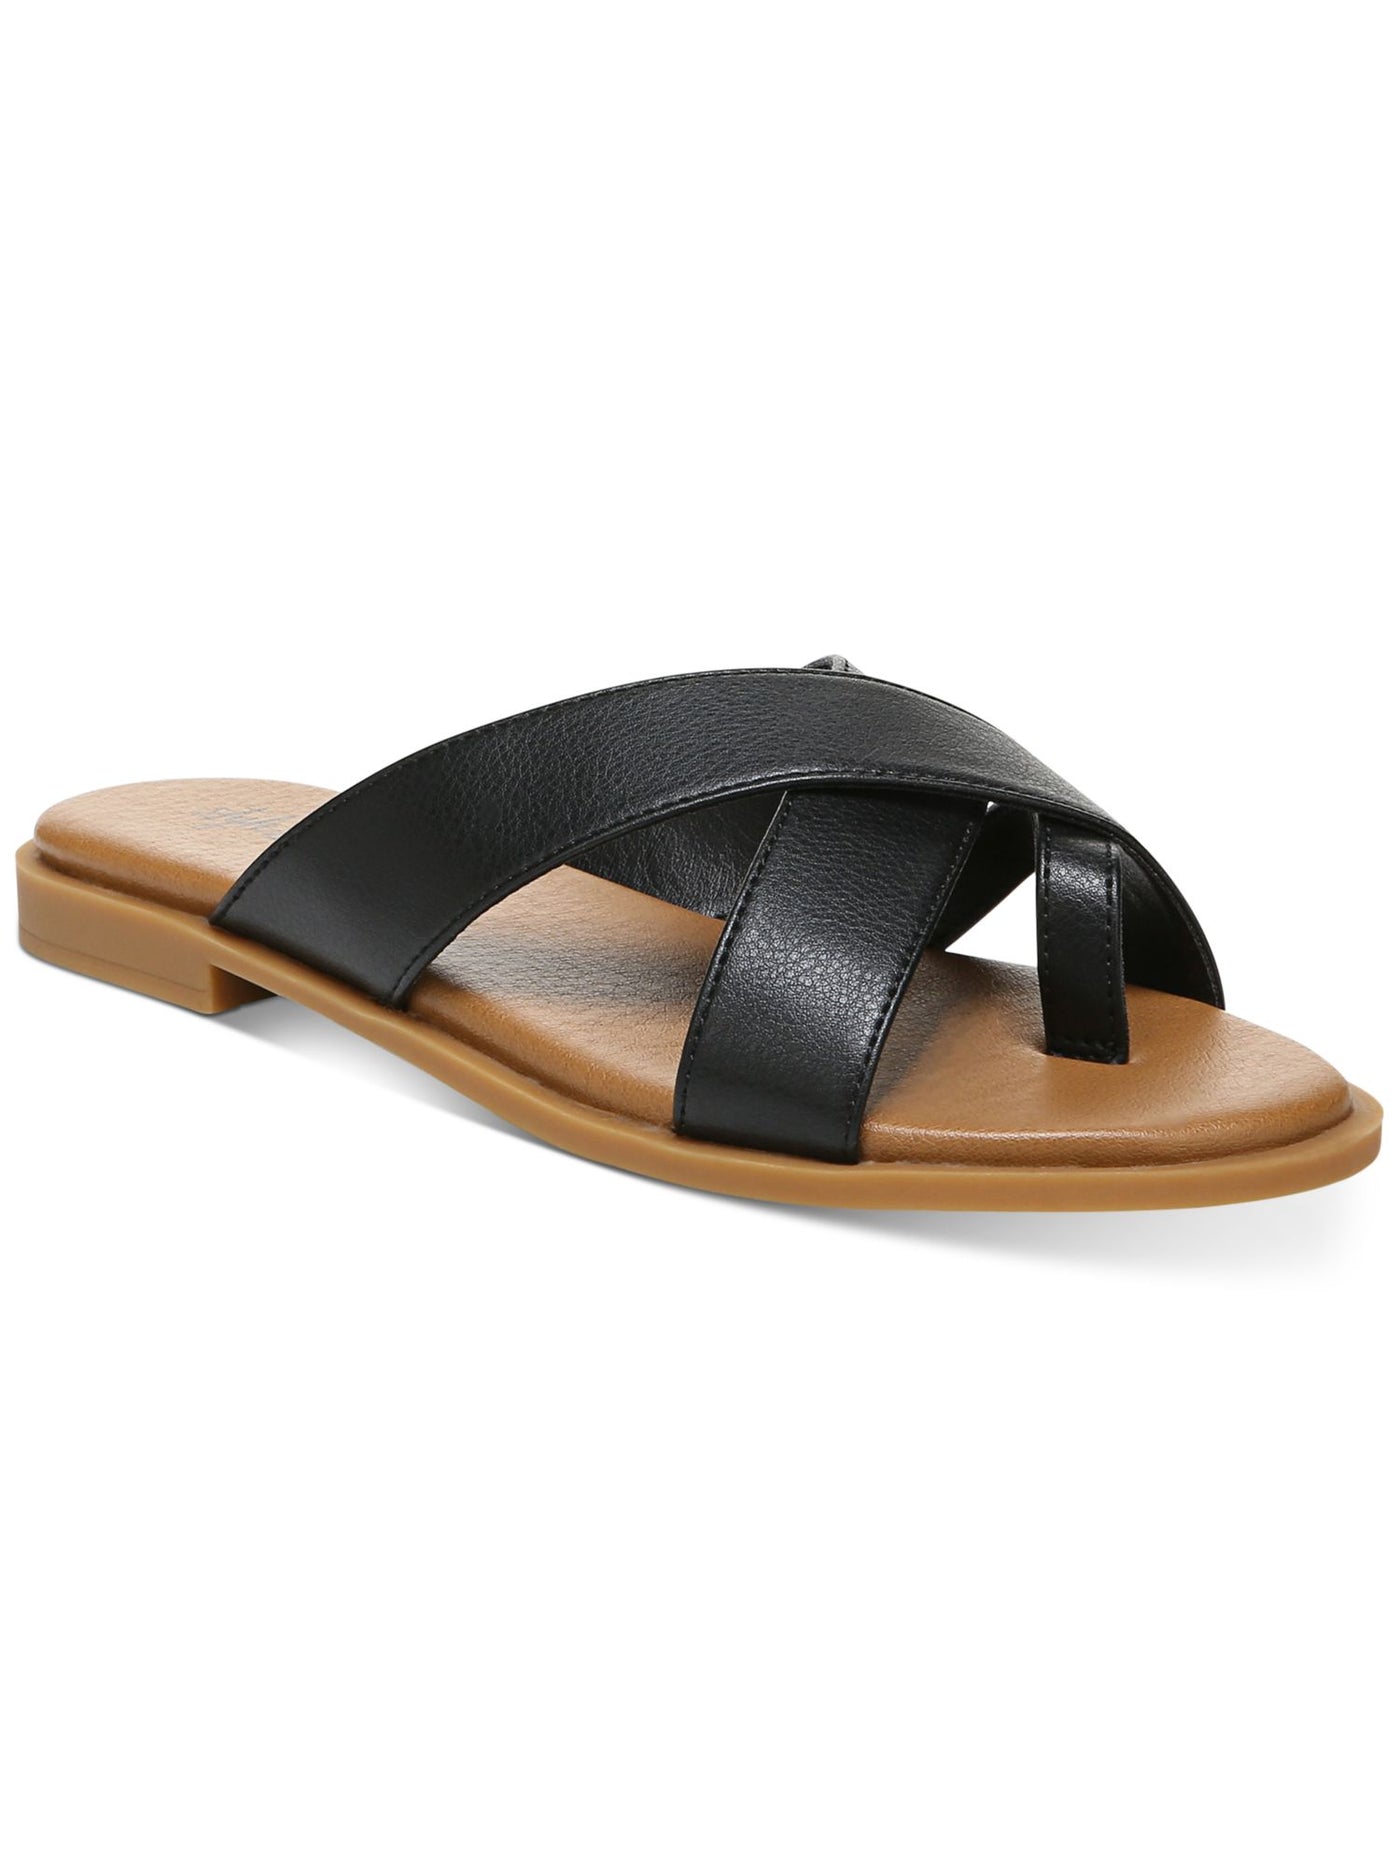 STYLE & COMPANY Womens Black Crisscross Straps Toe-Ring Cushioned Carolyn Round Toe Block Heel Slip On Slide Sandals Shoes 7.5 M